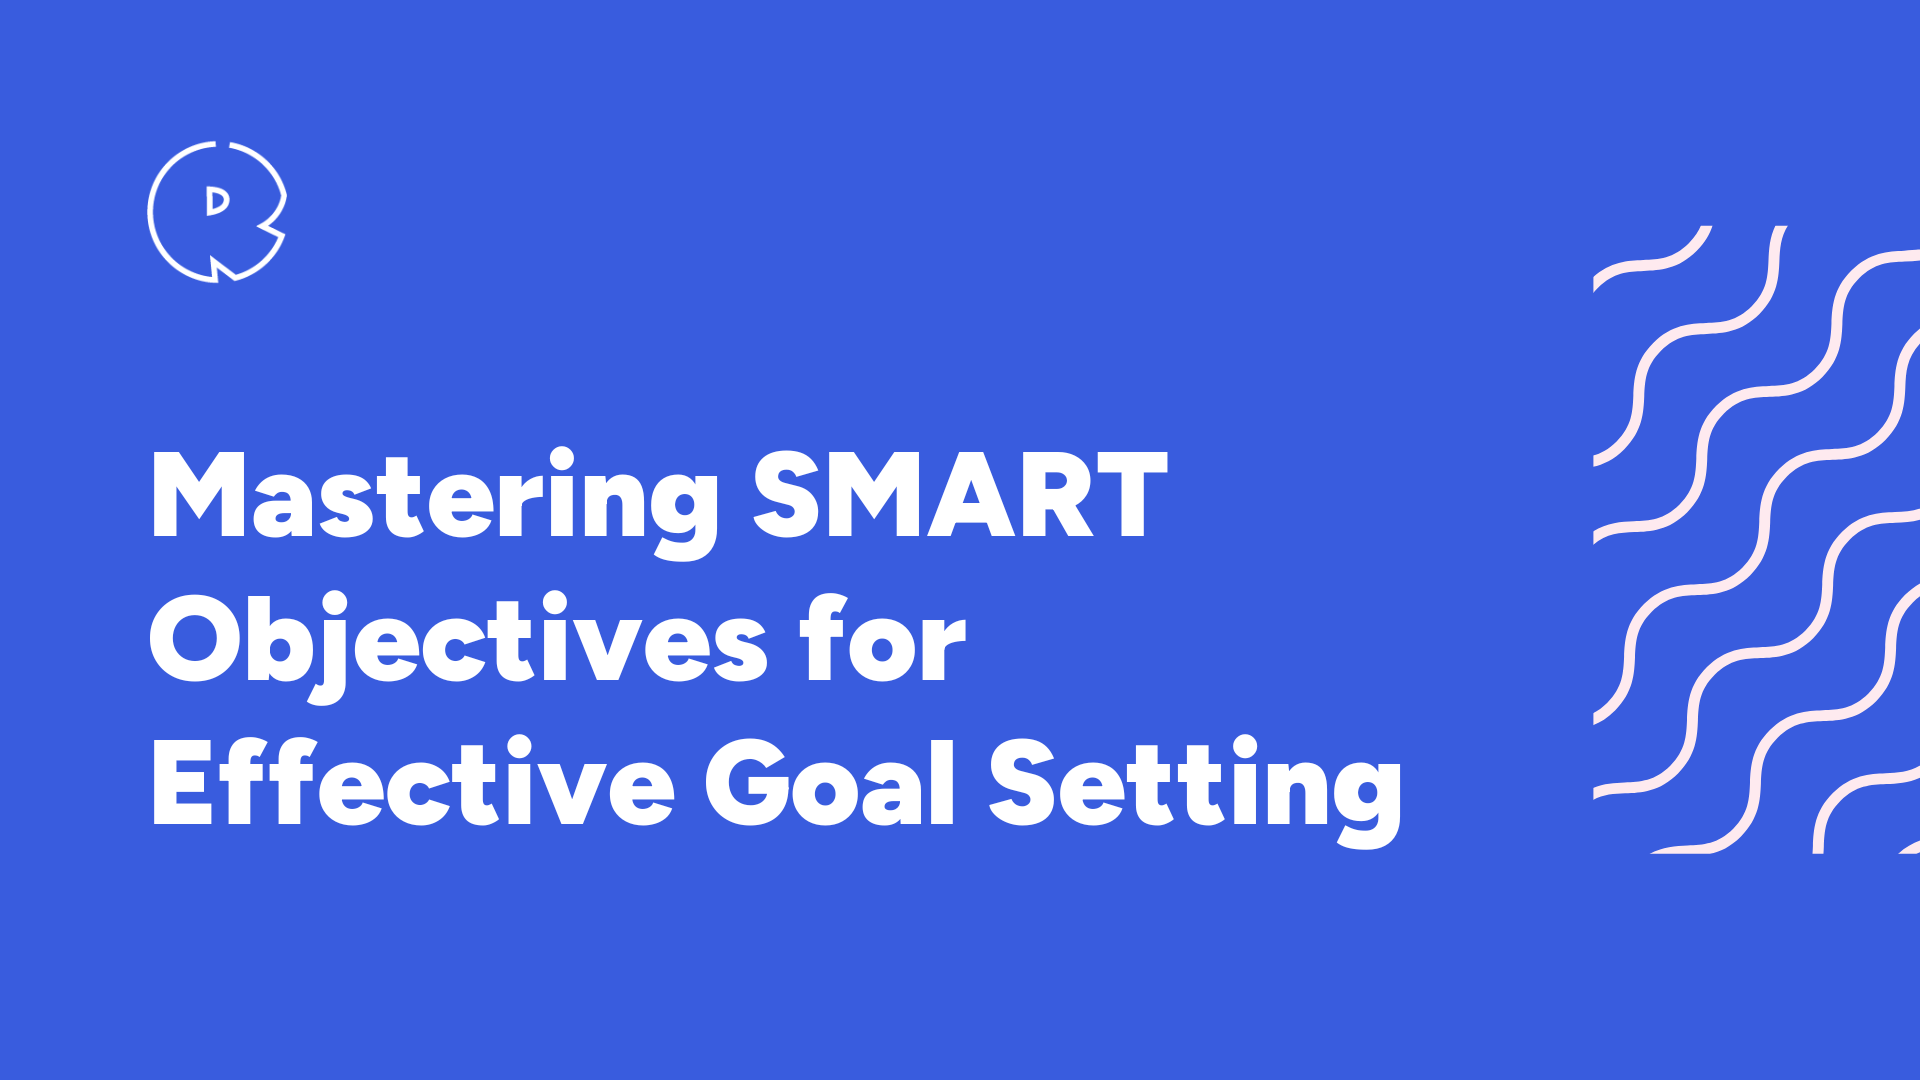 SMART Objectives for Effective Goal Setting